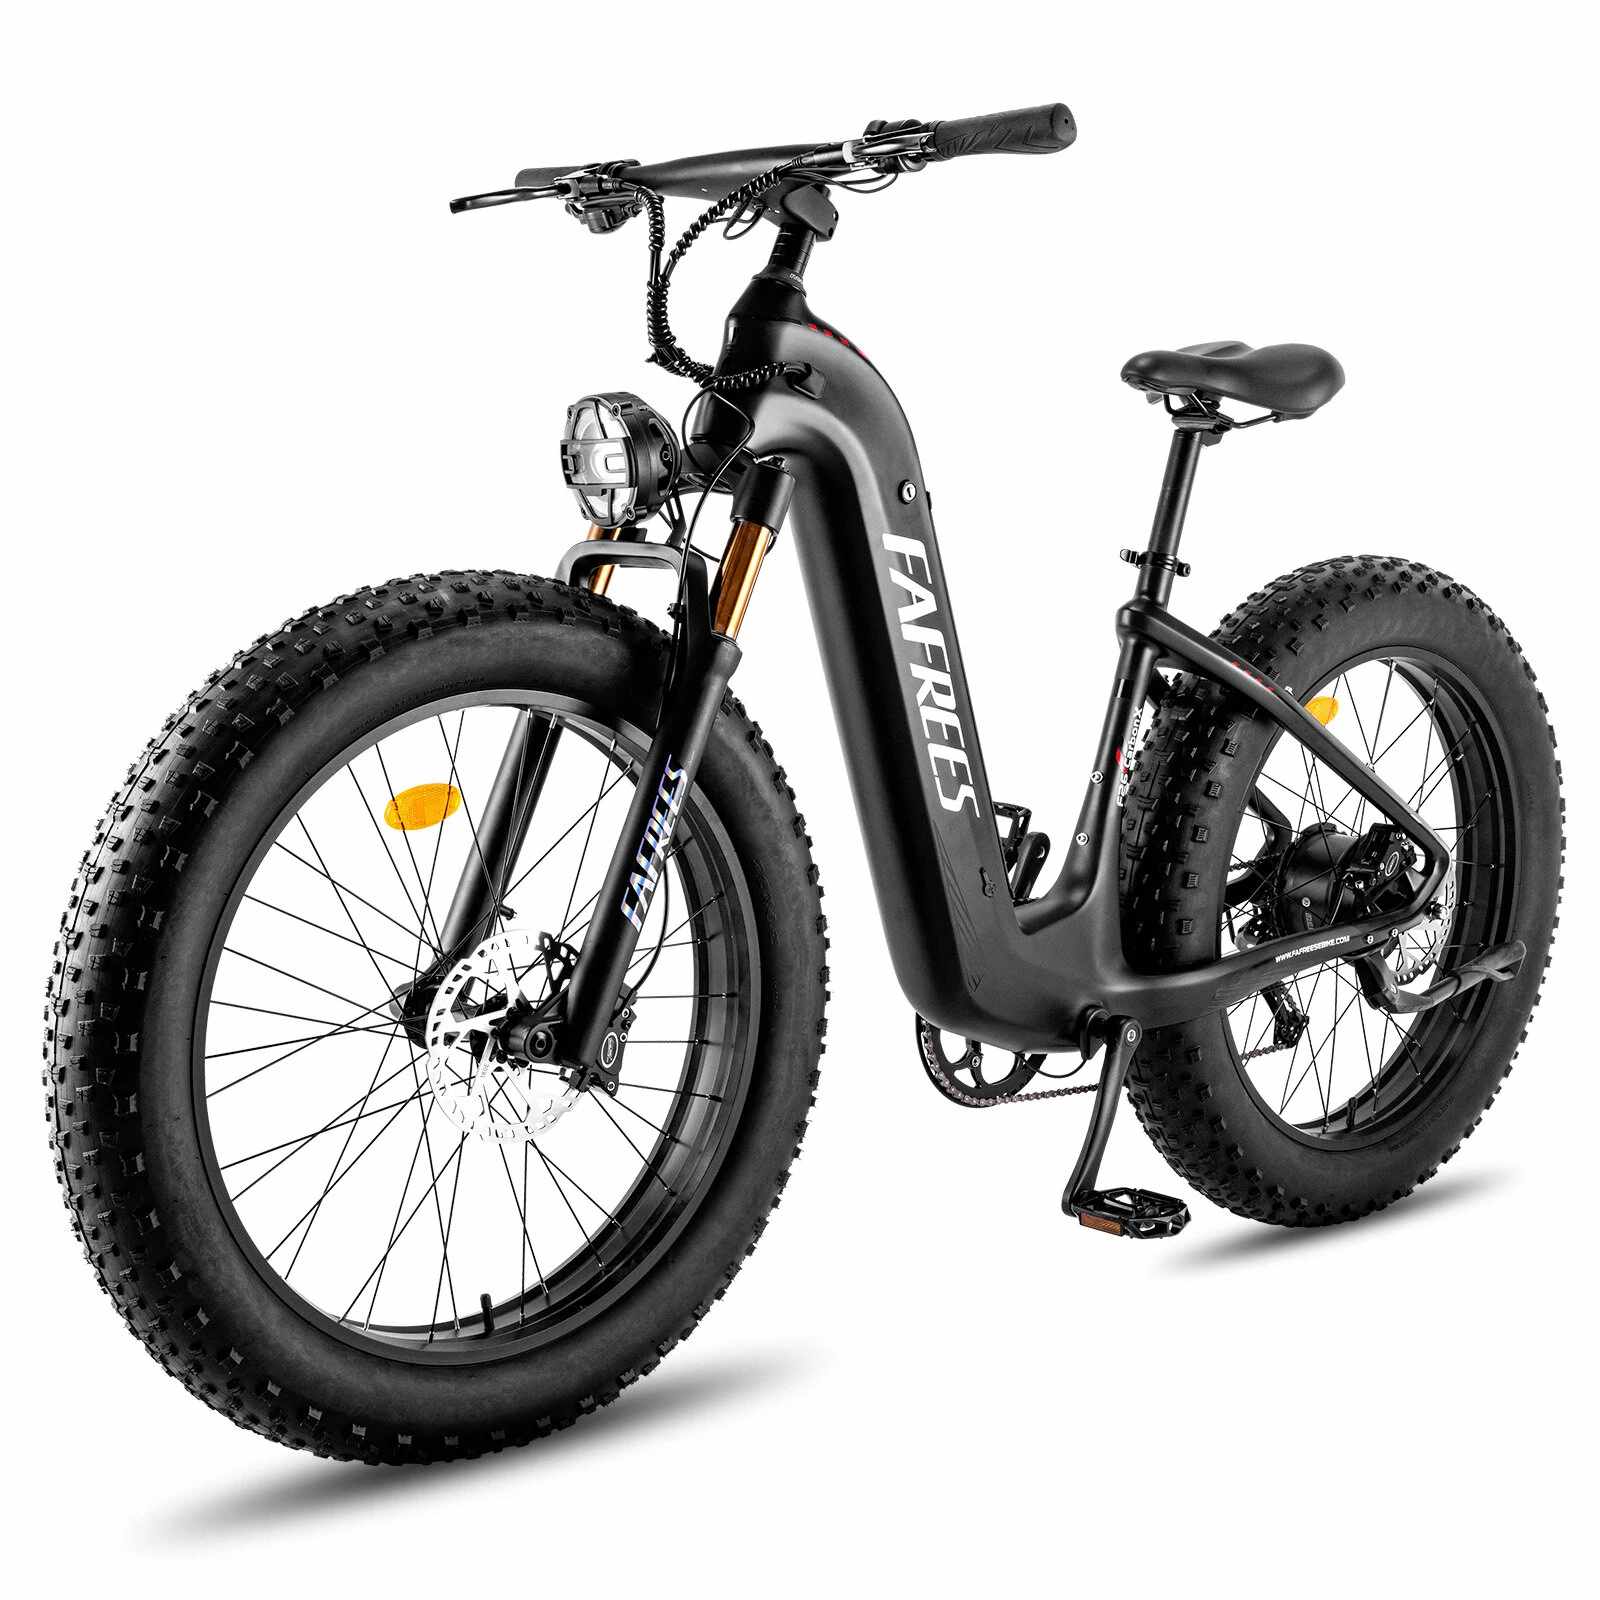 FAFREES F26 Carbon X Electric Bike Banggood Coupon Promo Code